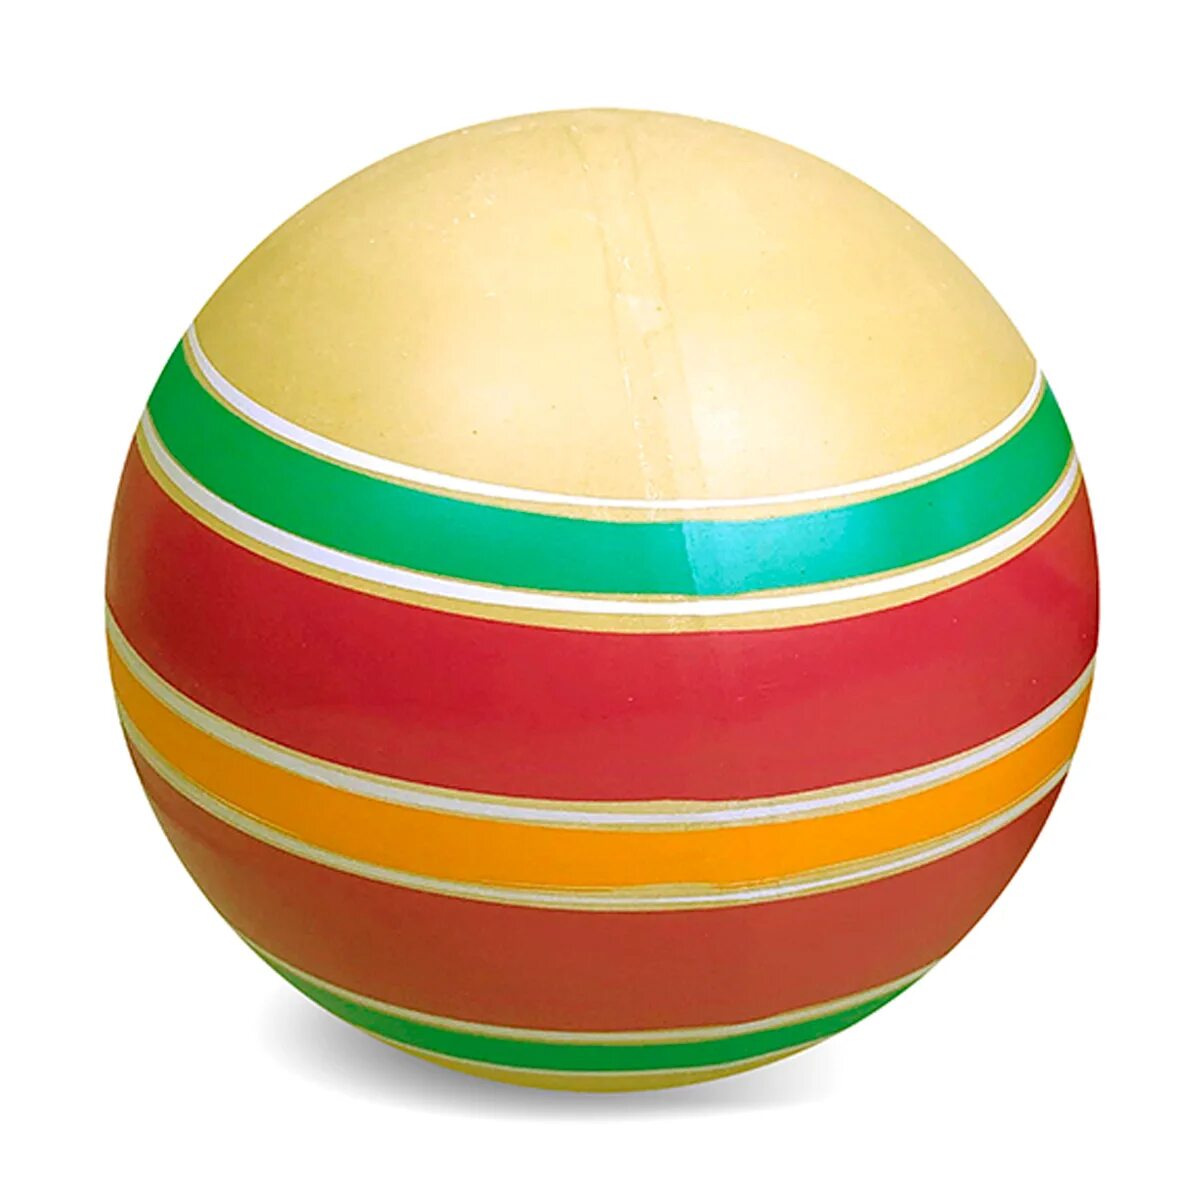 Мяч резиновый 125мм р3-125 кл. Мяч эко Юла 12,5 ручн окраш р7-125. Мяч д. 125мм эко ручное окраш.,. Мяч резиновый/125 мм/ручное окраш 44198. Купи мяч ребенку